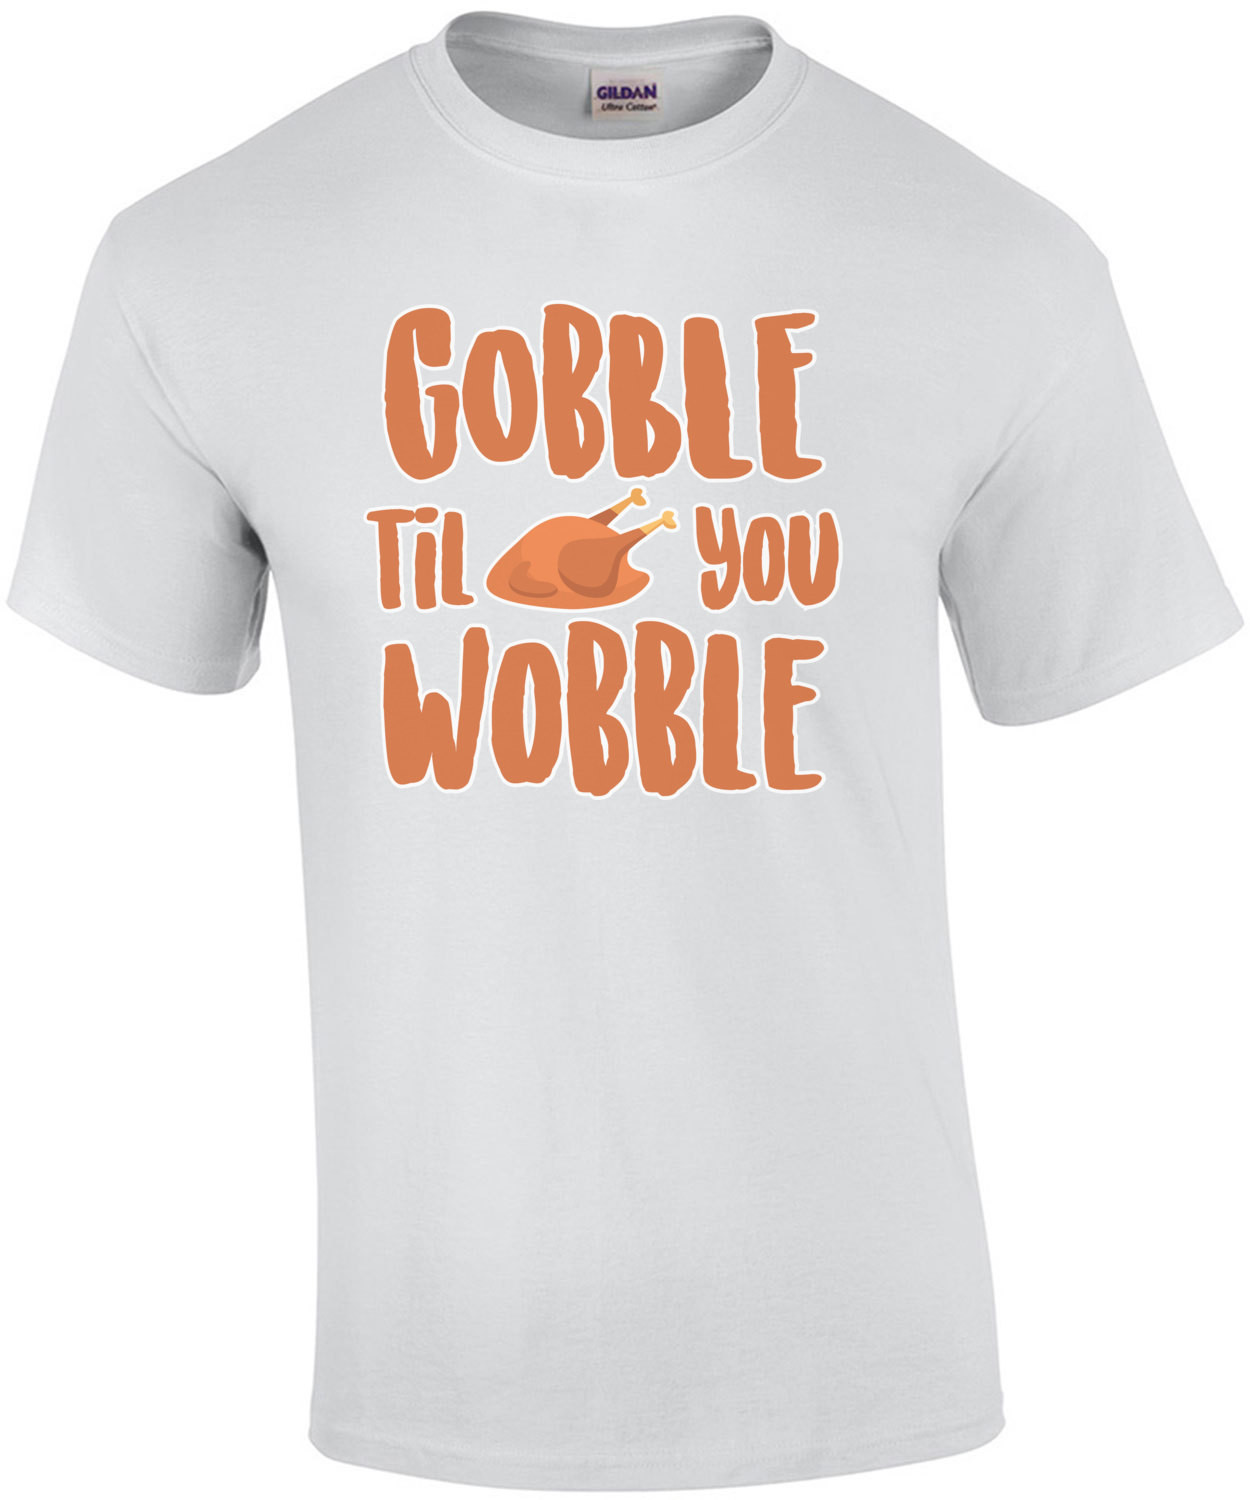 Gobble til you wobble - Turkey - Thanksgiving T-Shirt